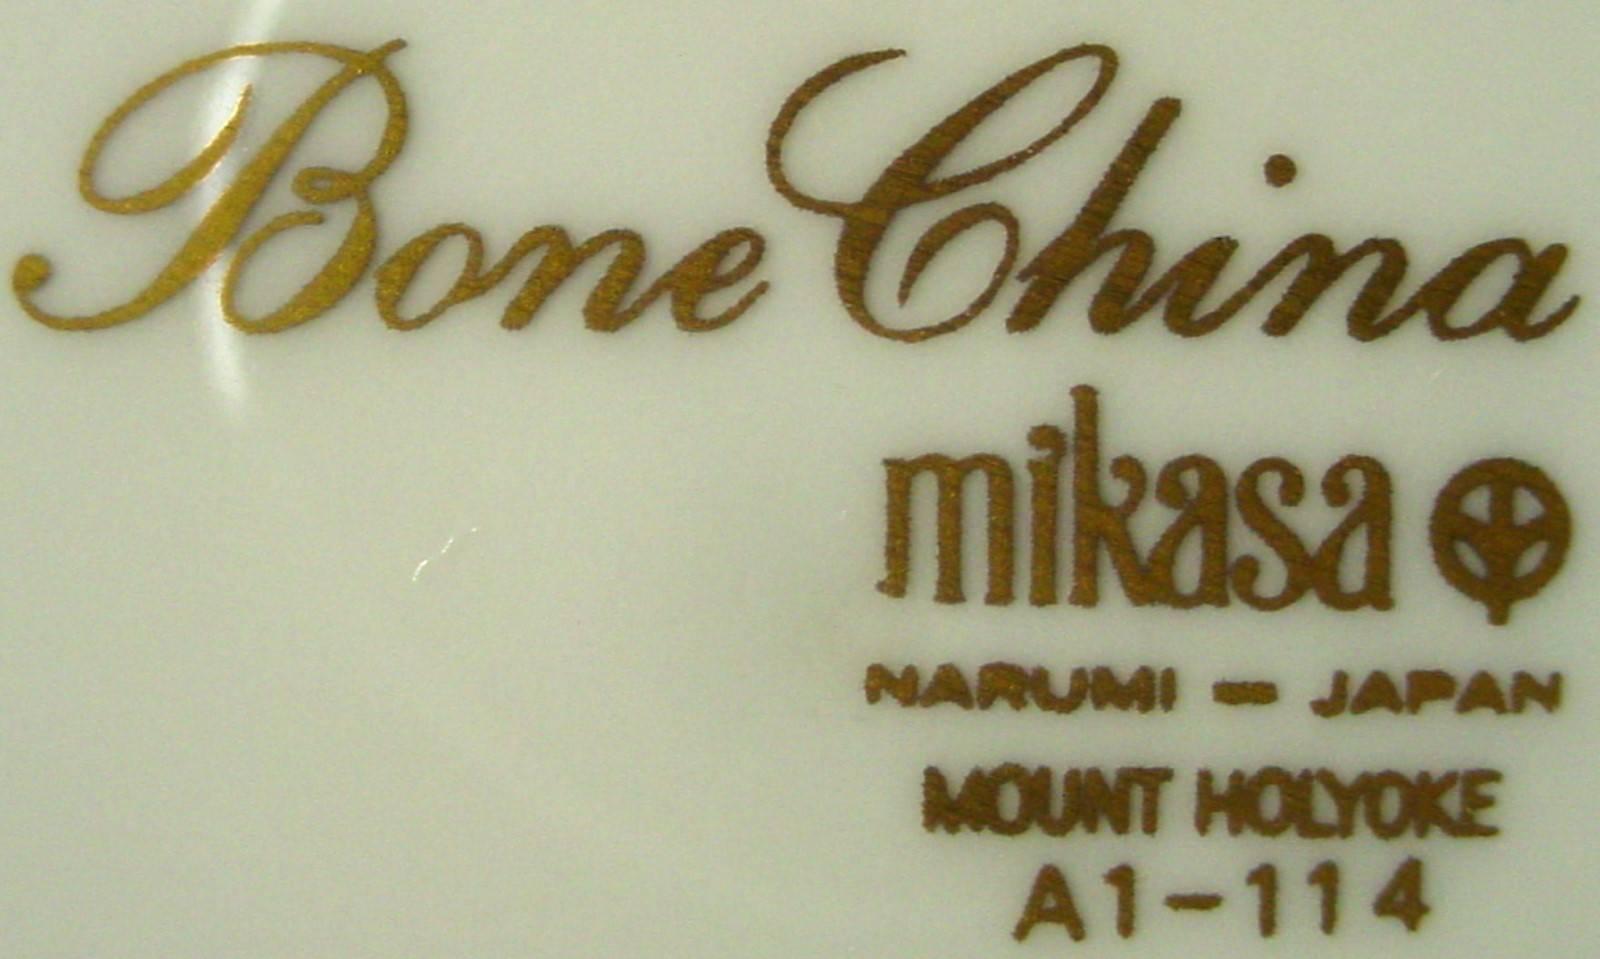 MIKASA china MOUNT HOLYOKE A1-114 pattern 91-piece SET SERVICE for 12 + serving 1